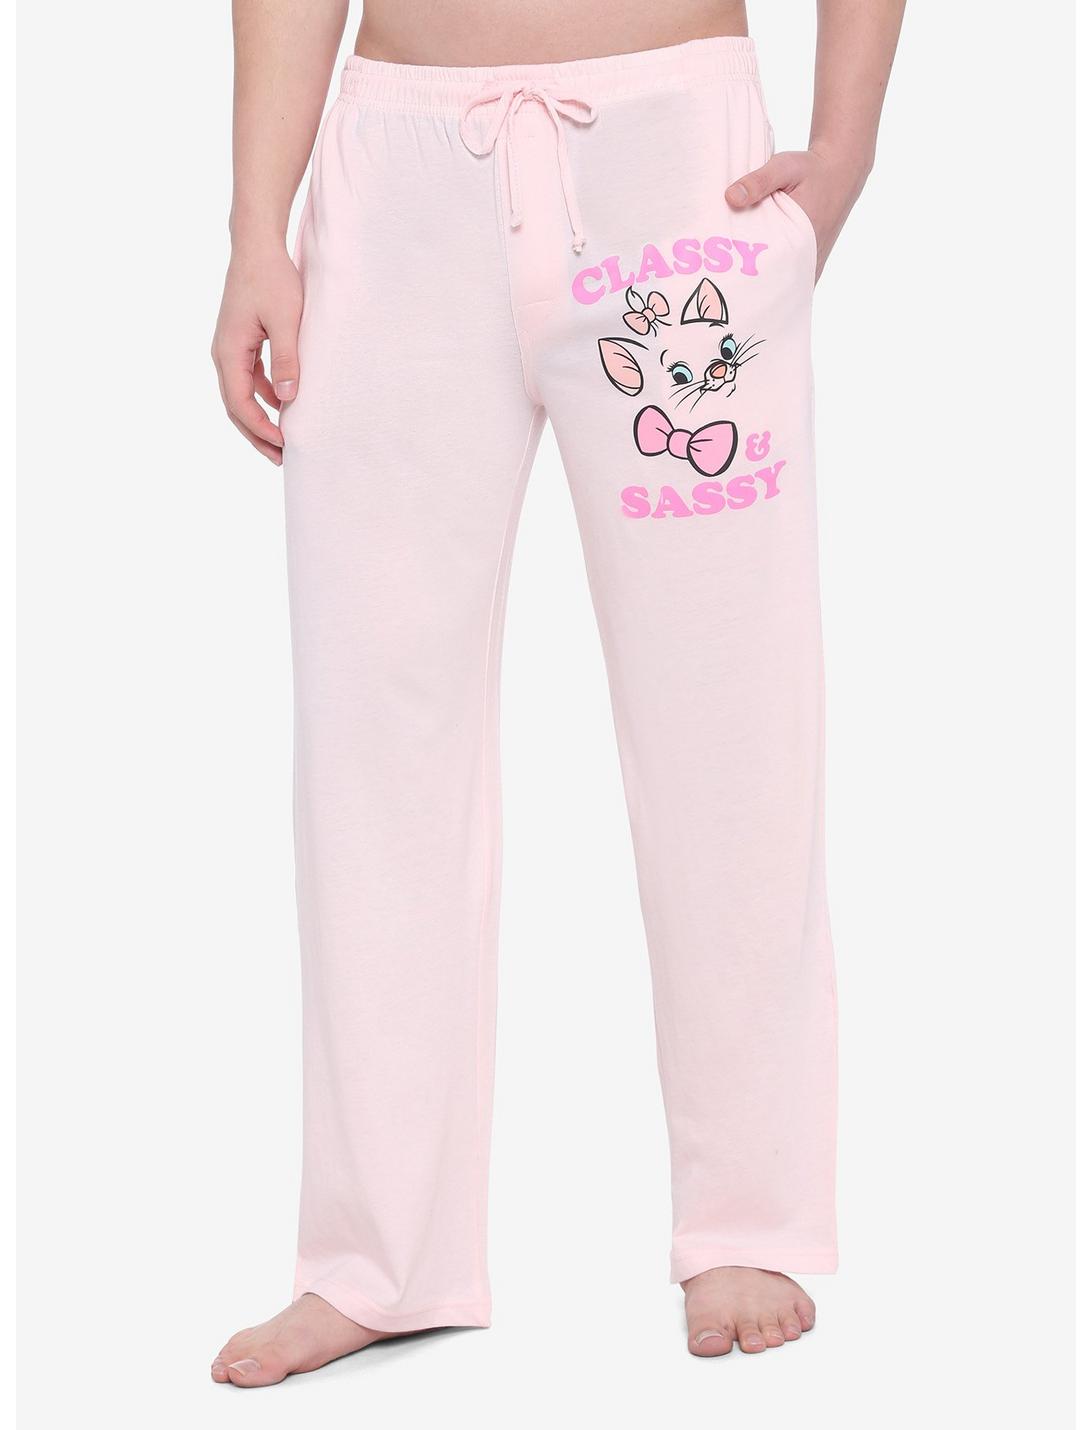 Disney The Aristocats Marie Classy & Sassy Pajama Pants, PINK, hi-res